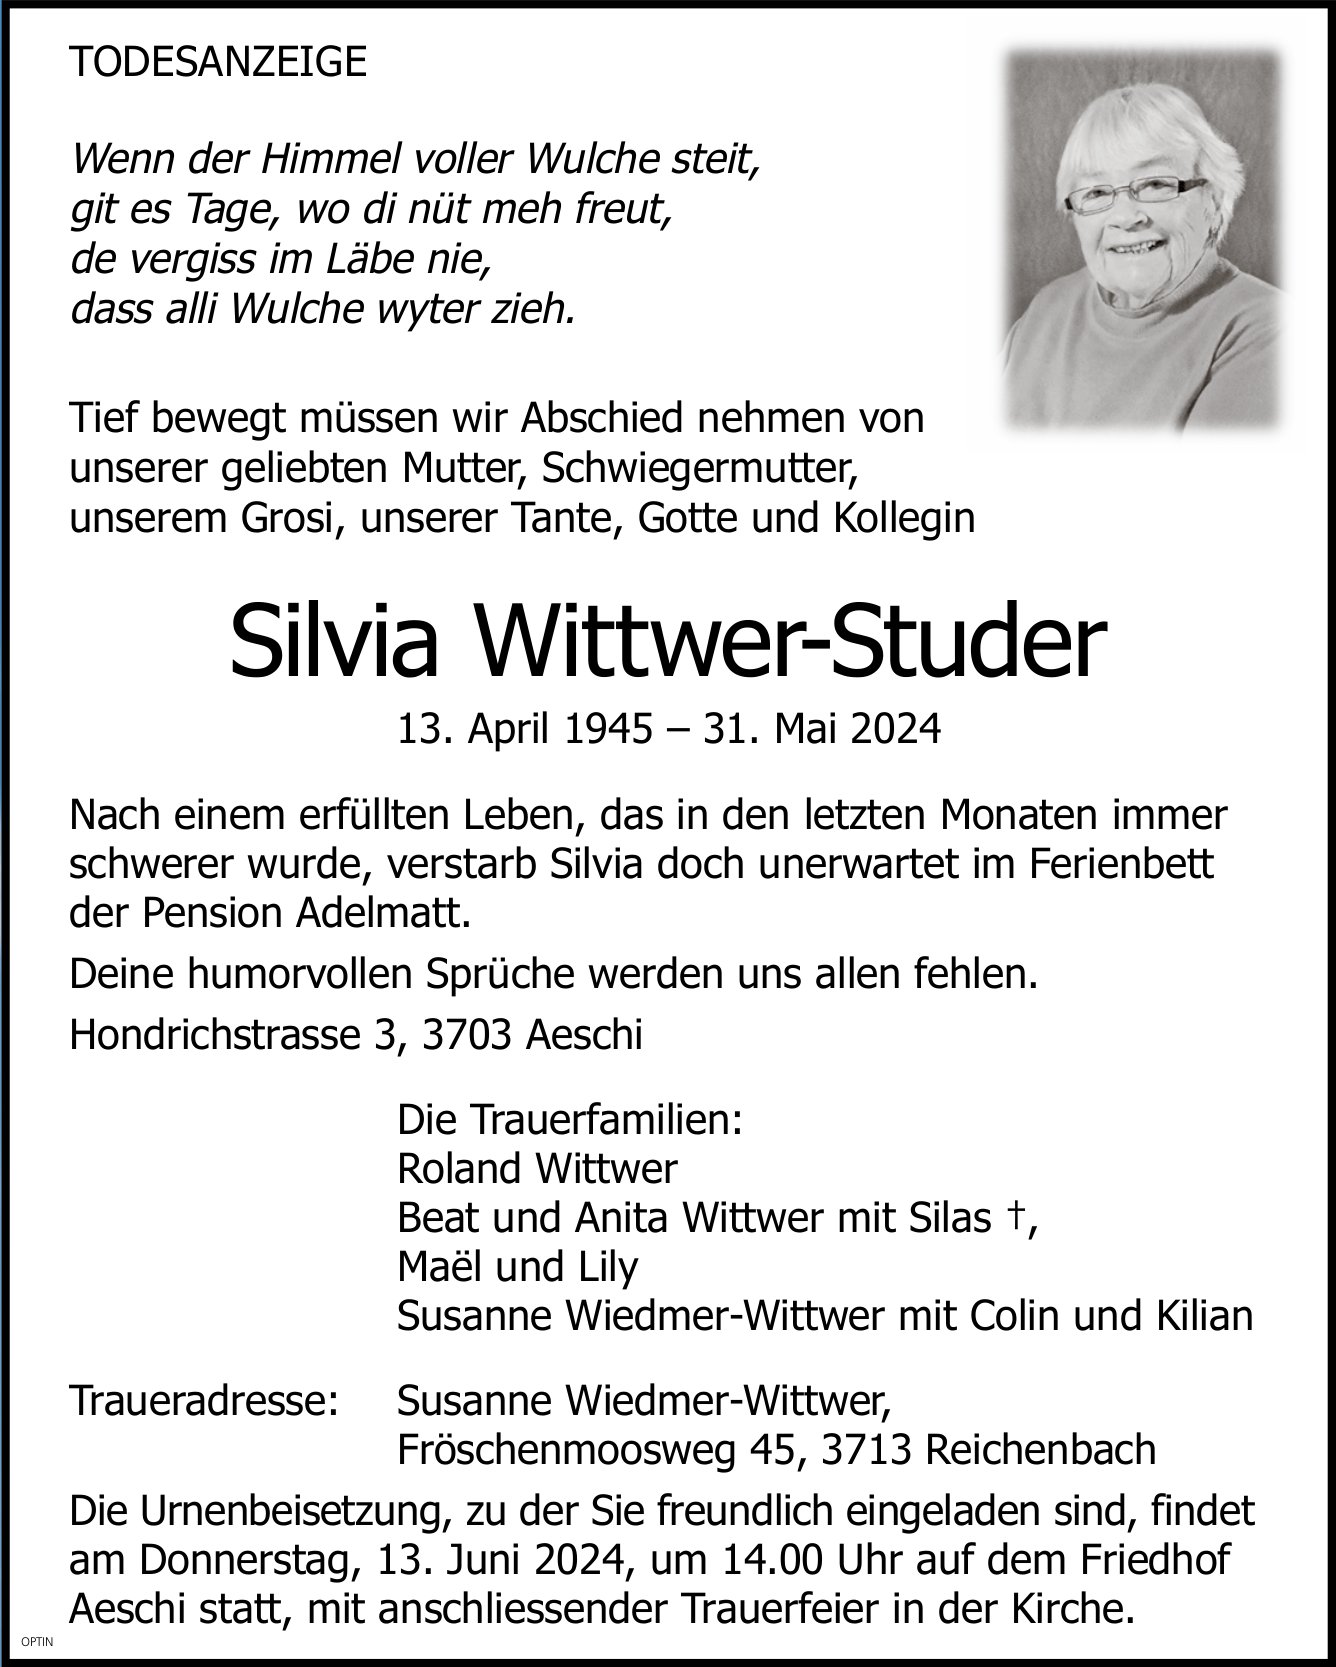 Silvia Wittwer-Studer, Mai 2024 / TA